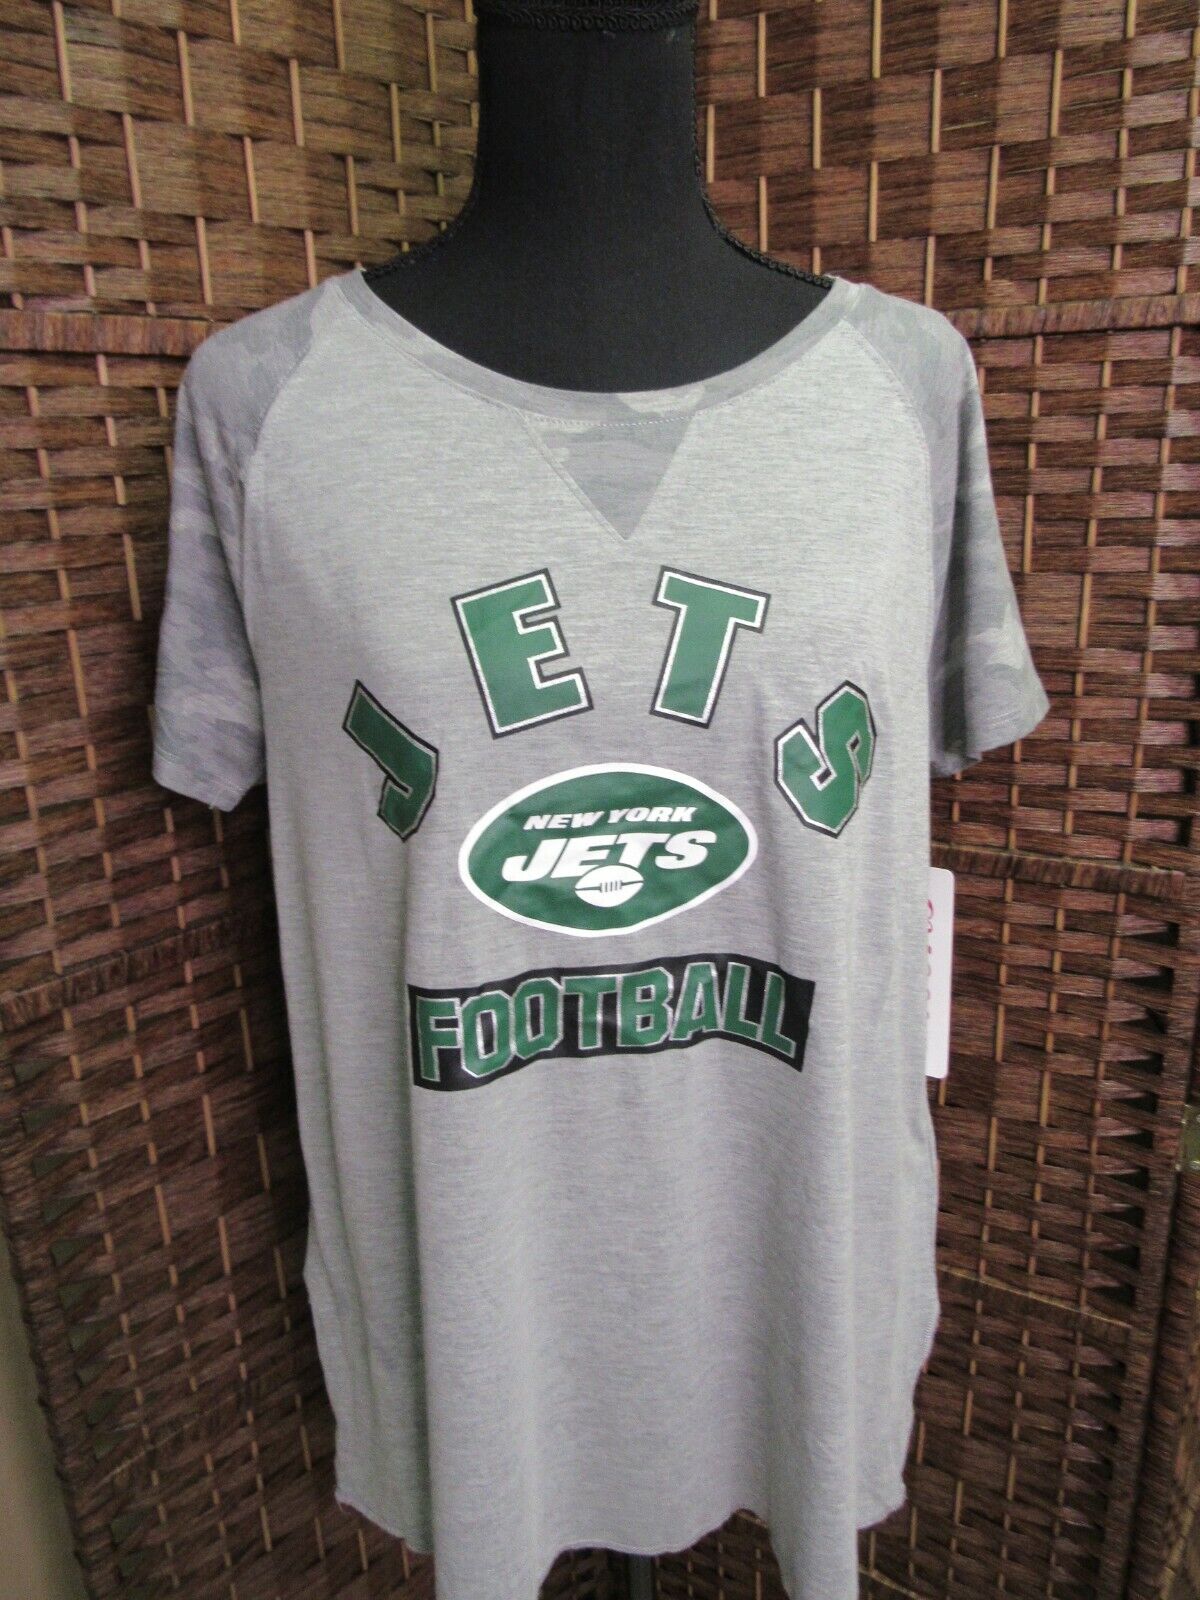 Junior NFL Teen Apparel Shirt Large 11 - 13 New York Jets Football T-Shirt CLAZ7